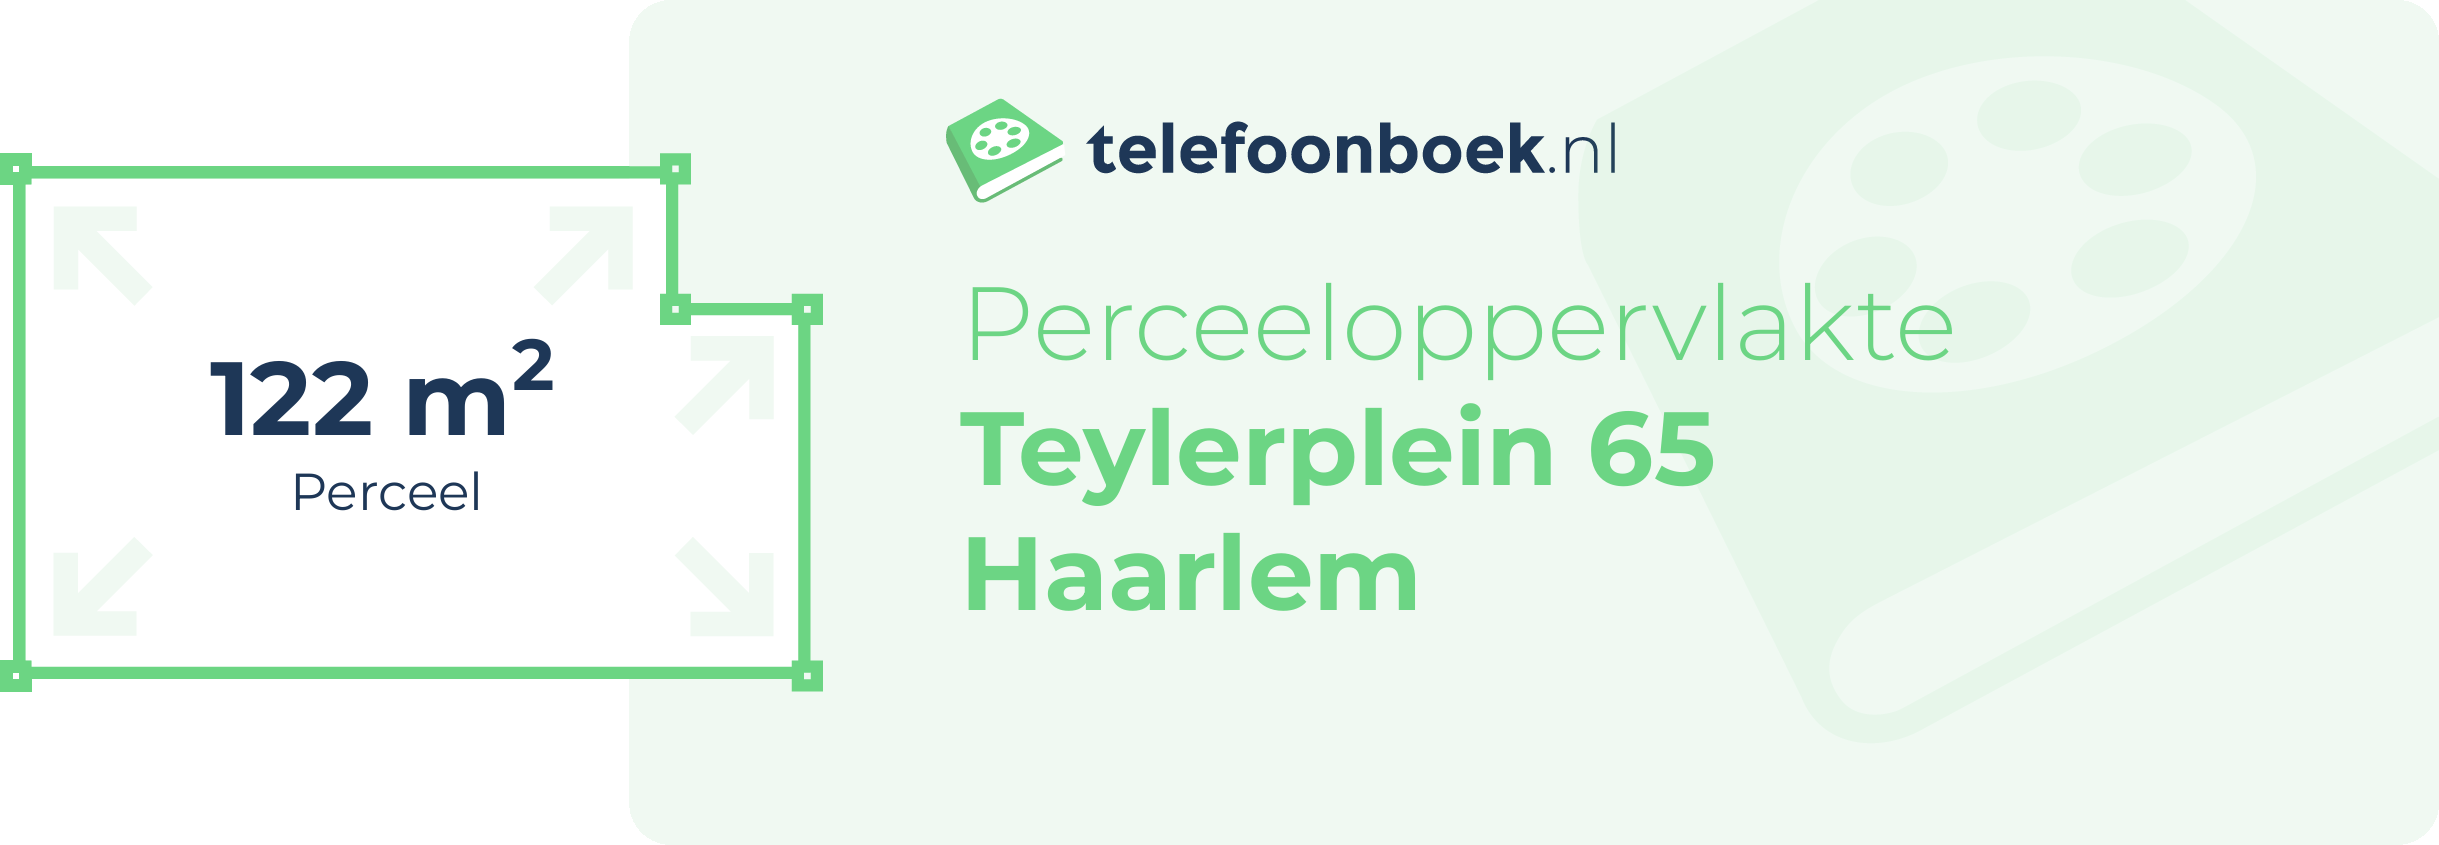 Perceeloppervlakte Teylerplein 65 Haarlem